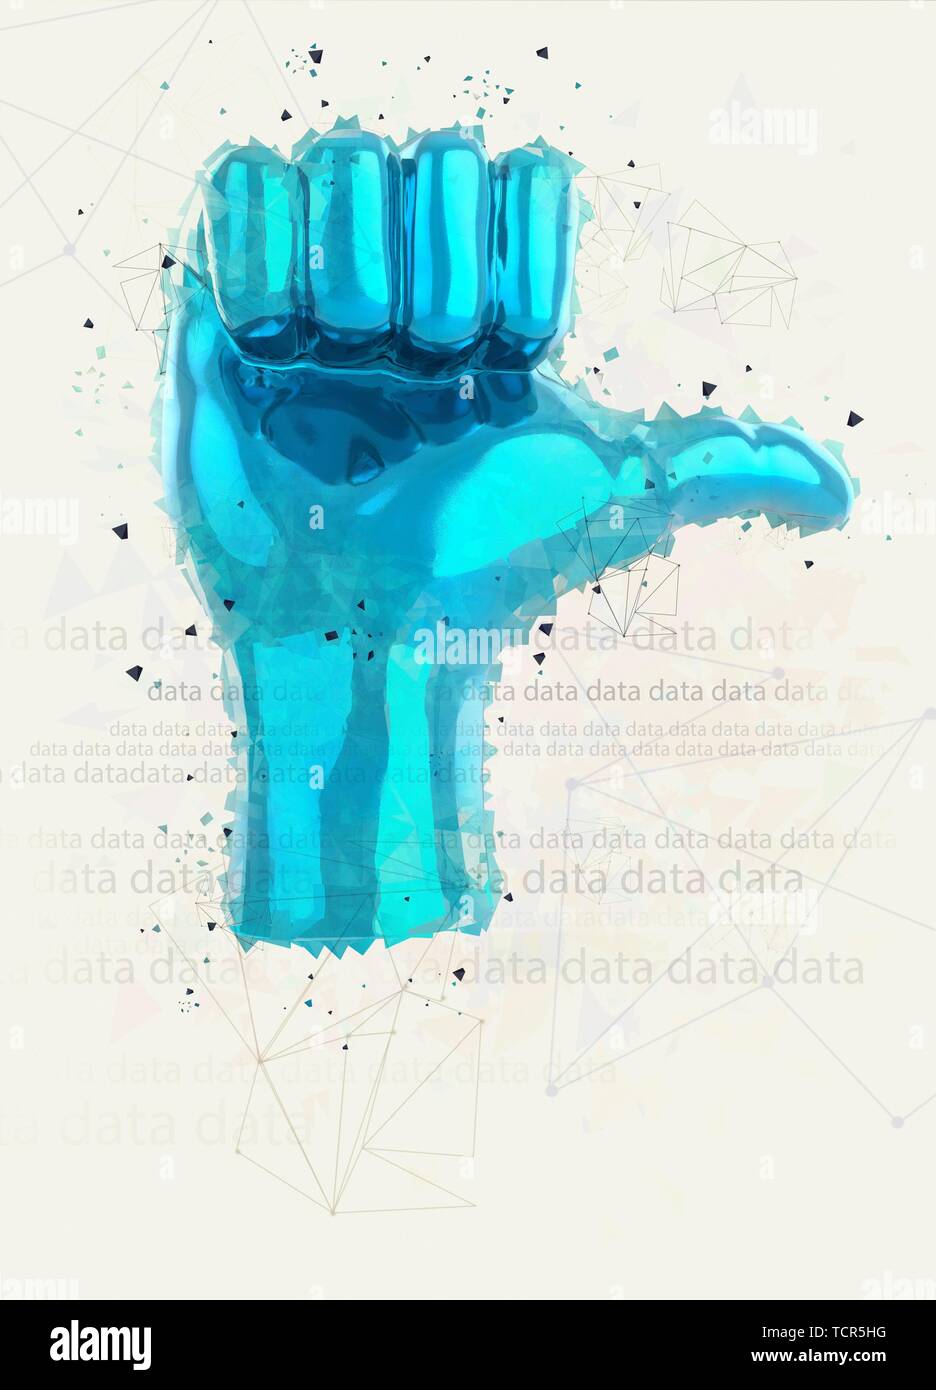 Human hand and thumb, illustration Stock Photo